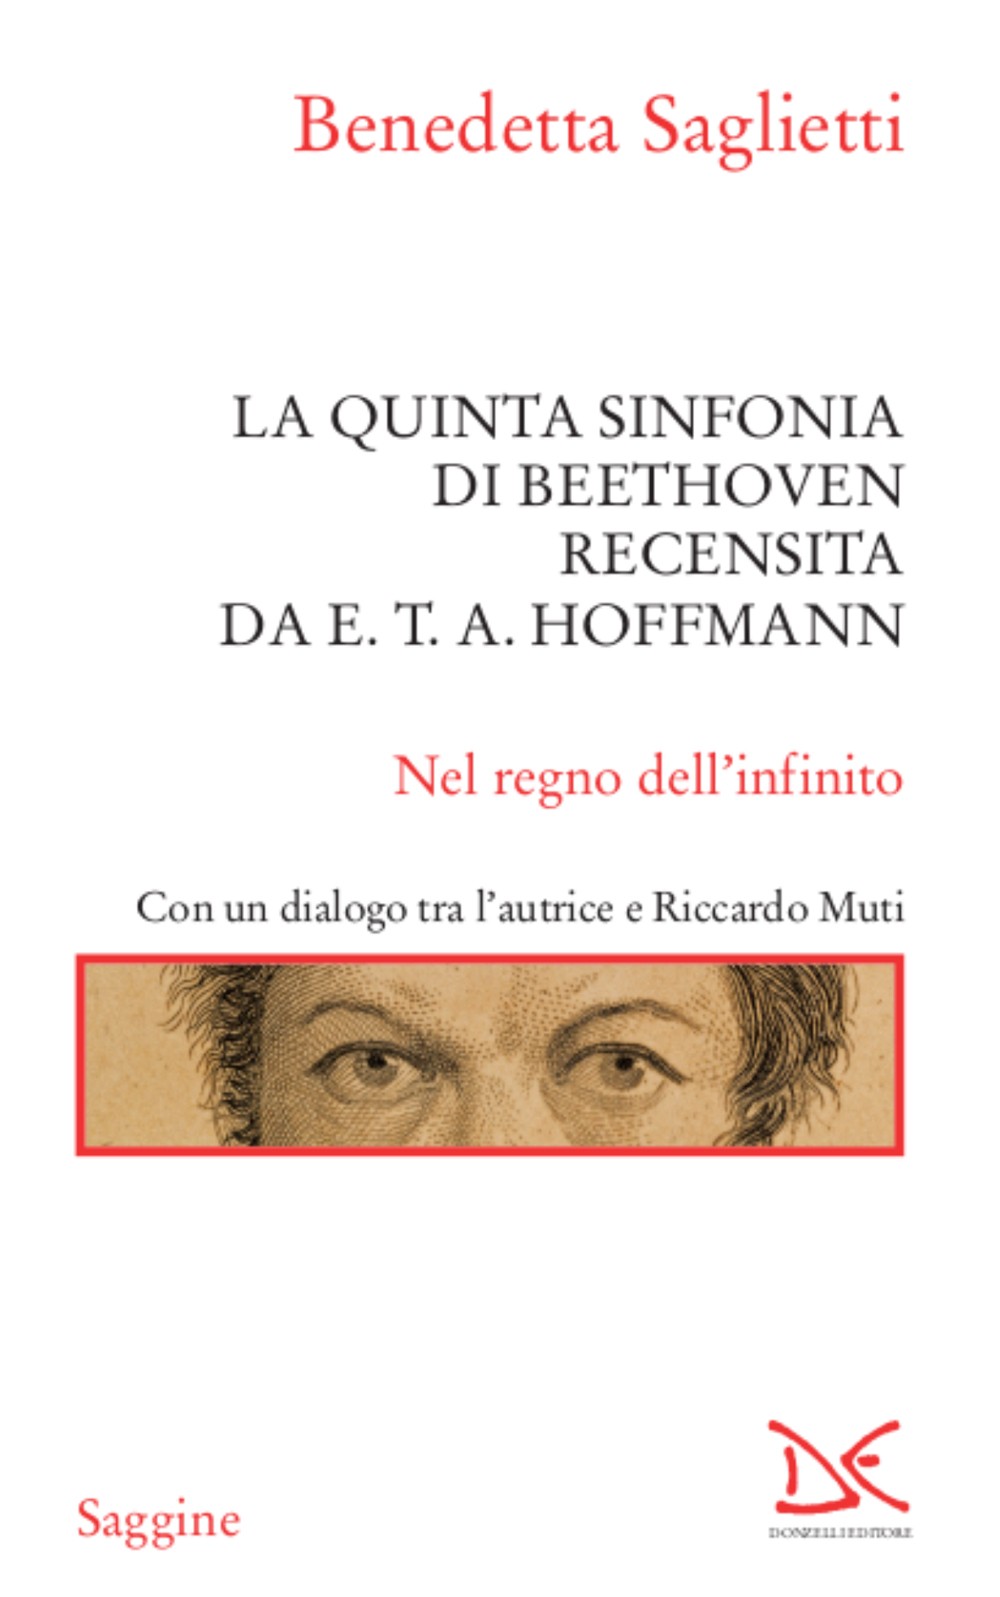 La quinta sinfonia di Beethoven recensita da E.T.A. Hoffmann - Librerie.coop